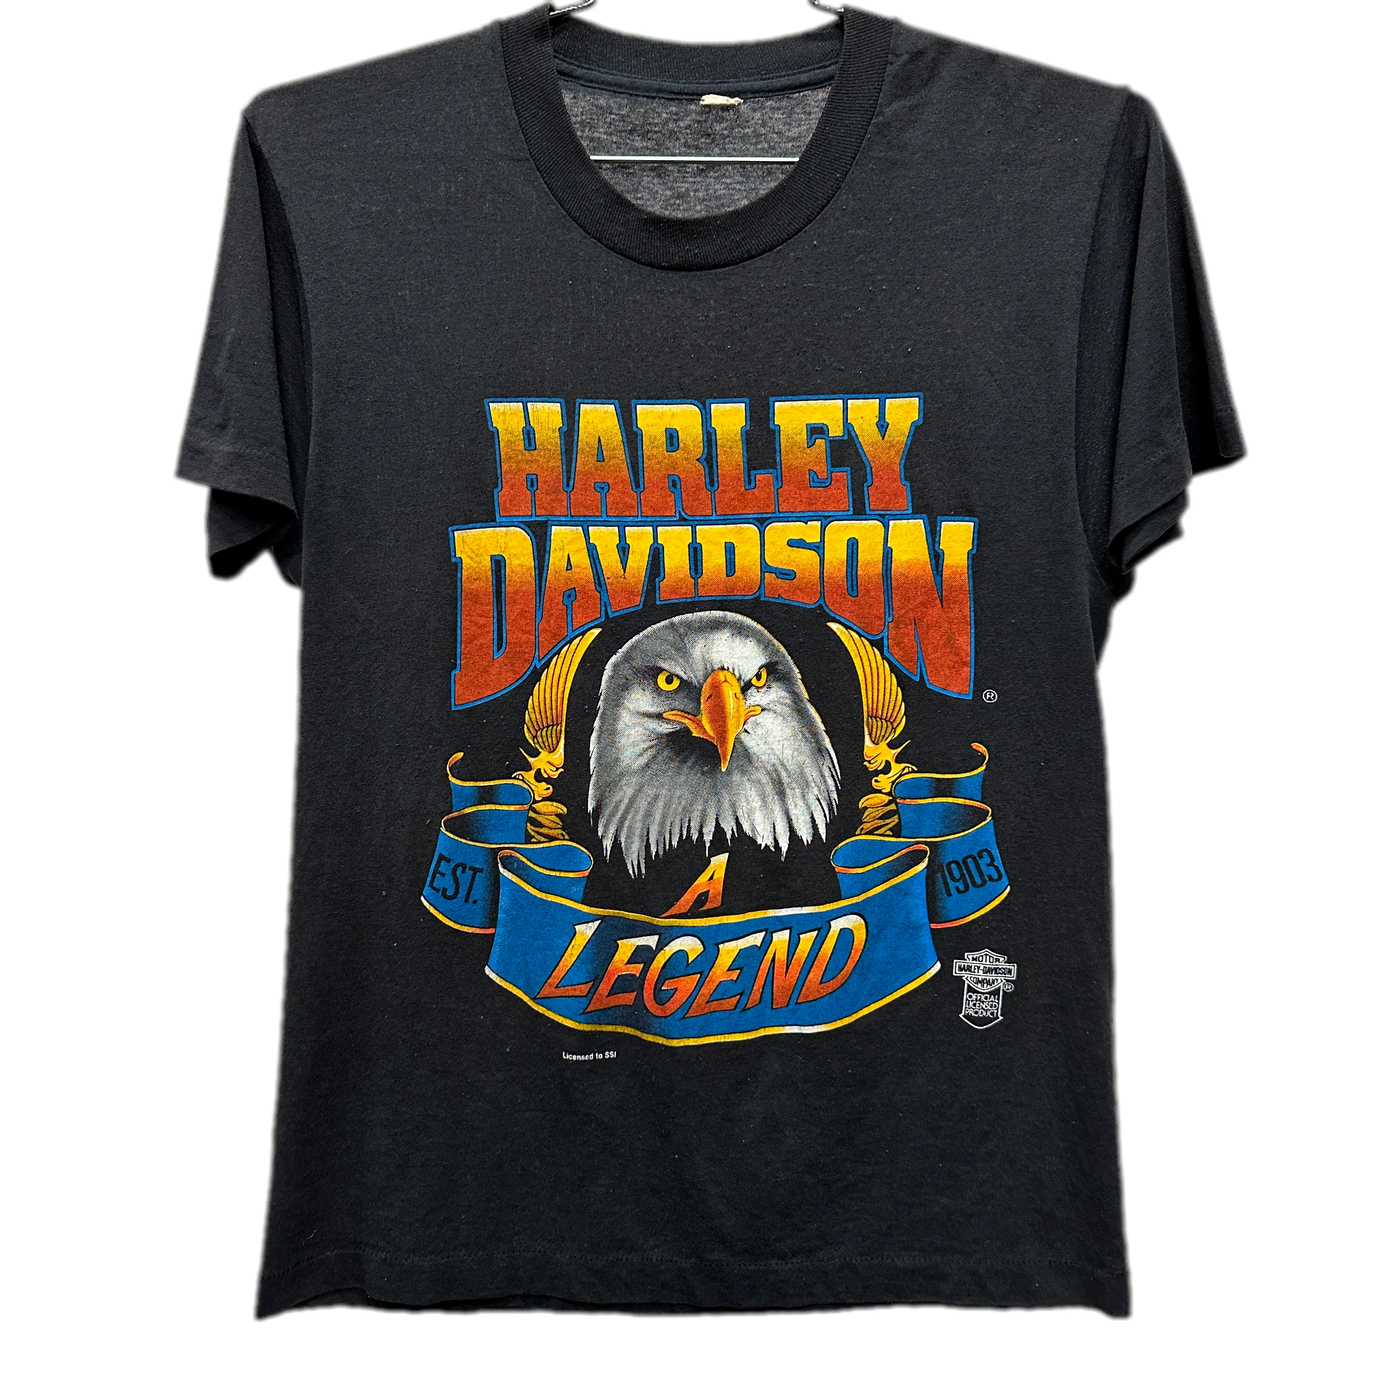 90's Eagle "A Legend" Black Harley Davidson T-shirt sz M